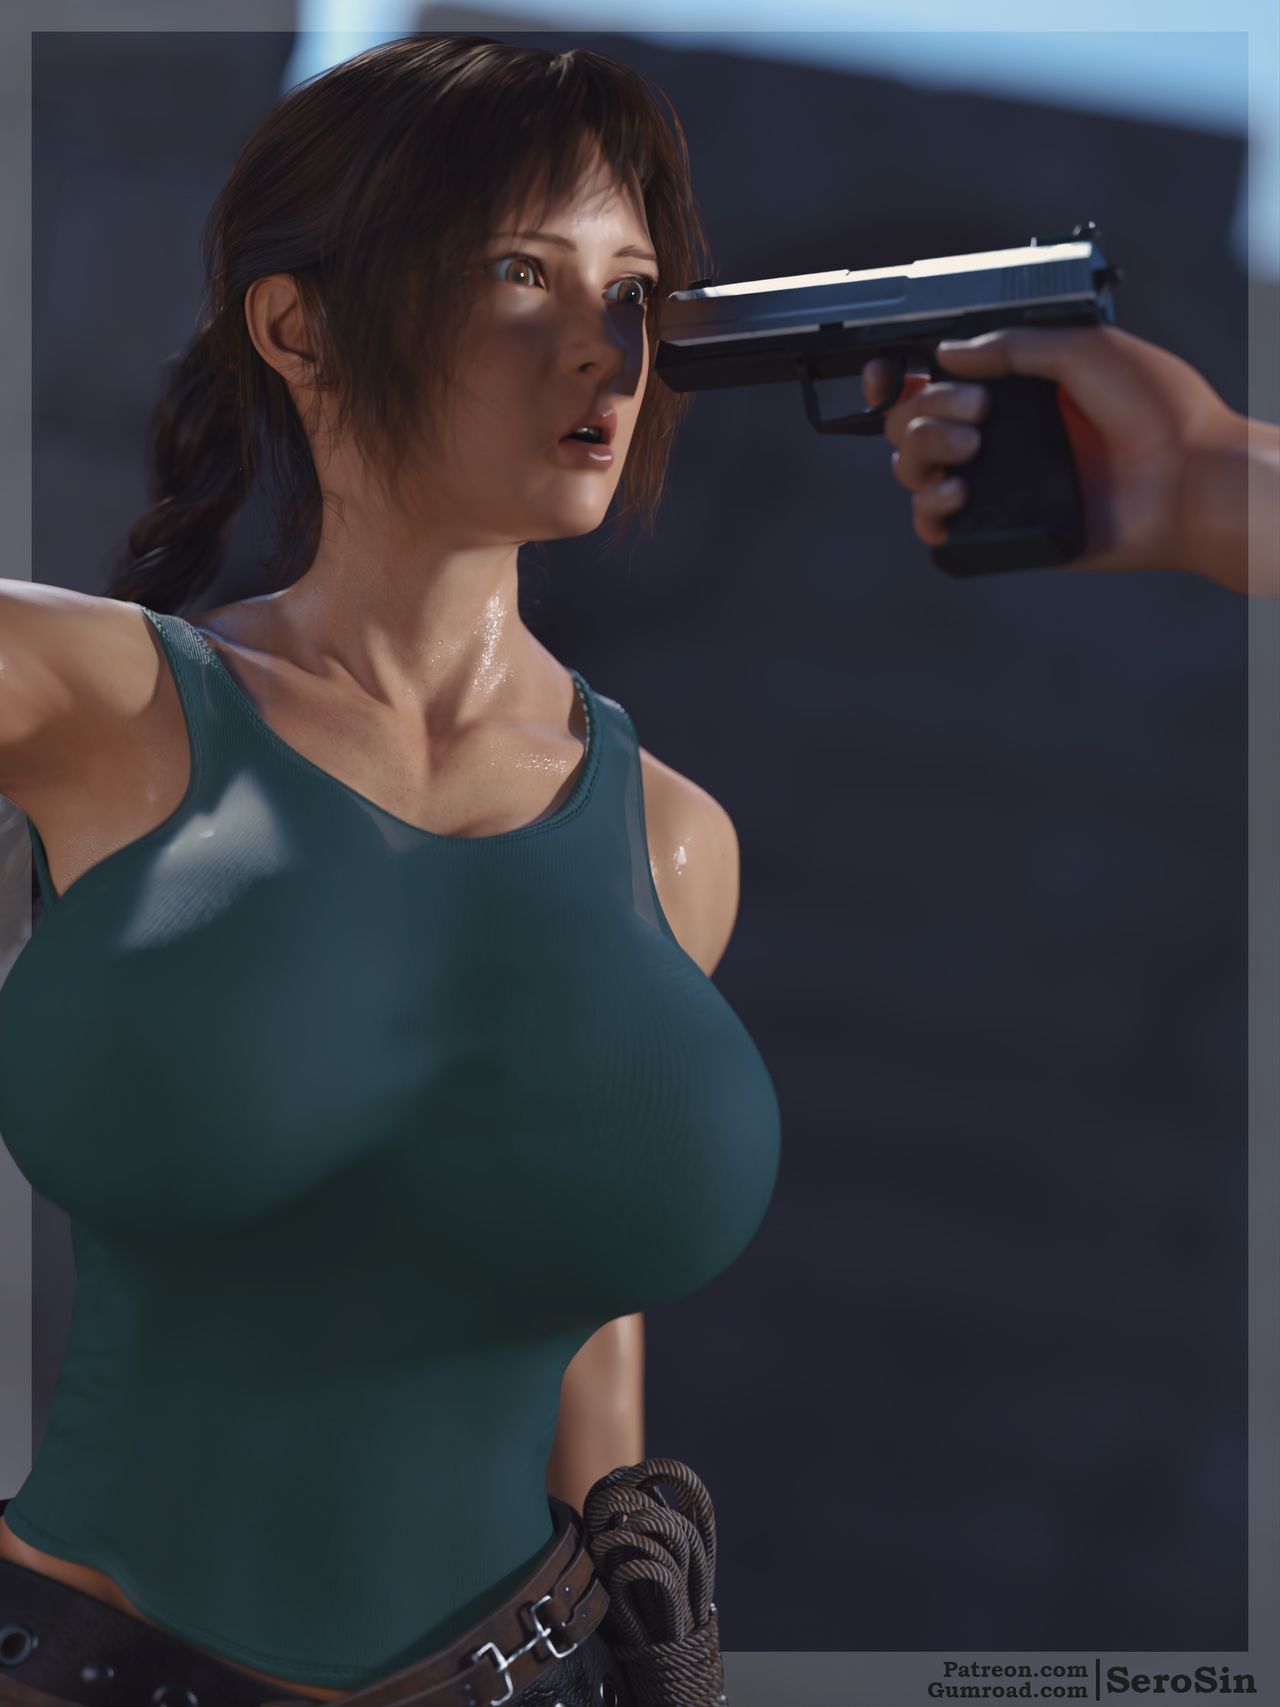 [SeroSin] Lara Croft: Captured 4